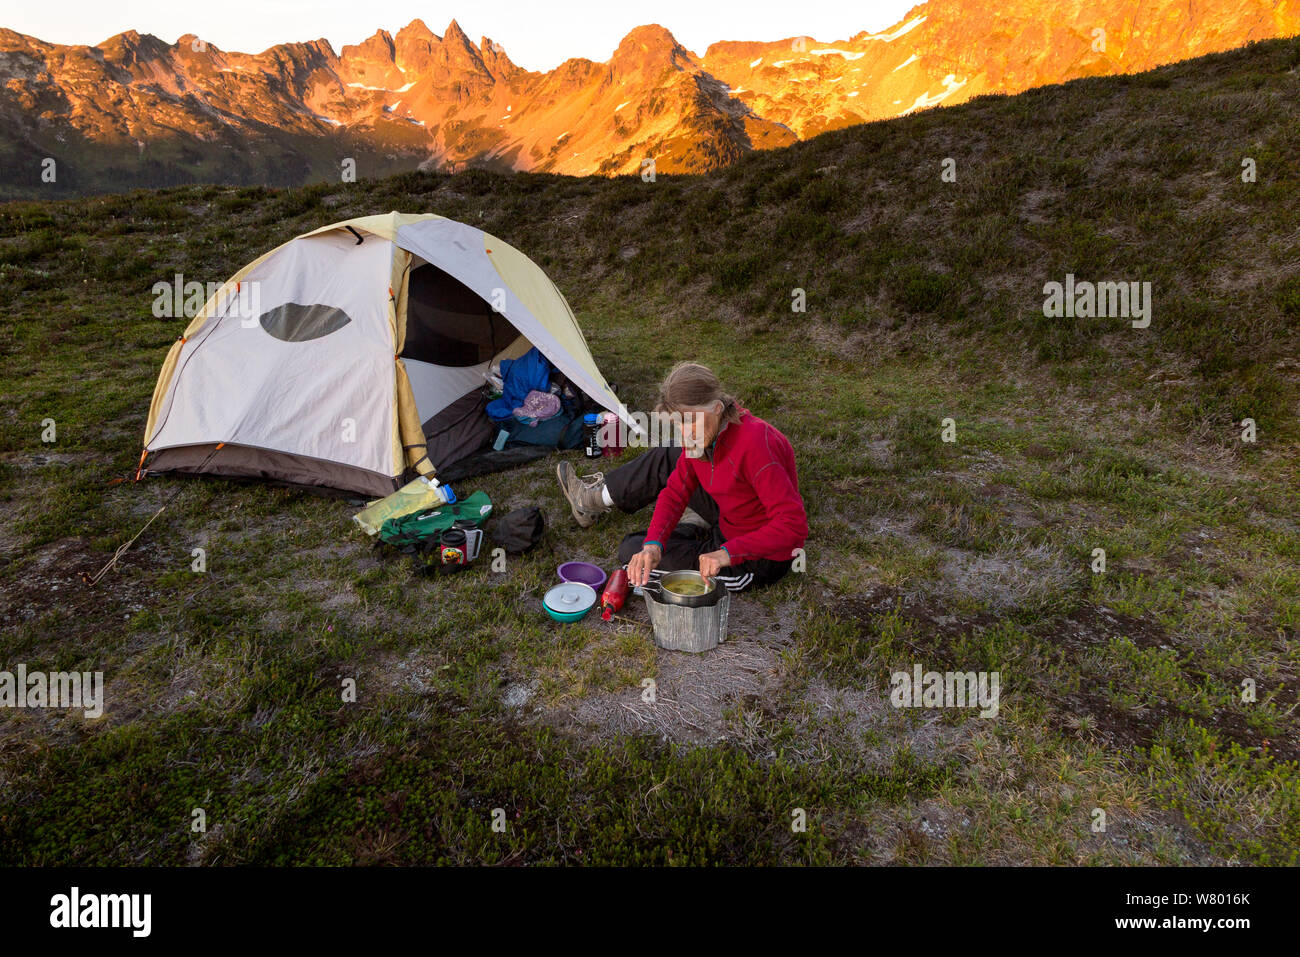 Woman cooking next to tent, Miners Ridge, Glacier Peak Wilderness, Wenatchee National Forest, Washington, USA. Model released. Stock Photo